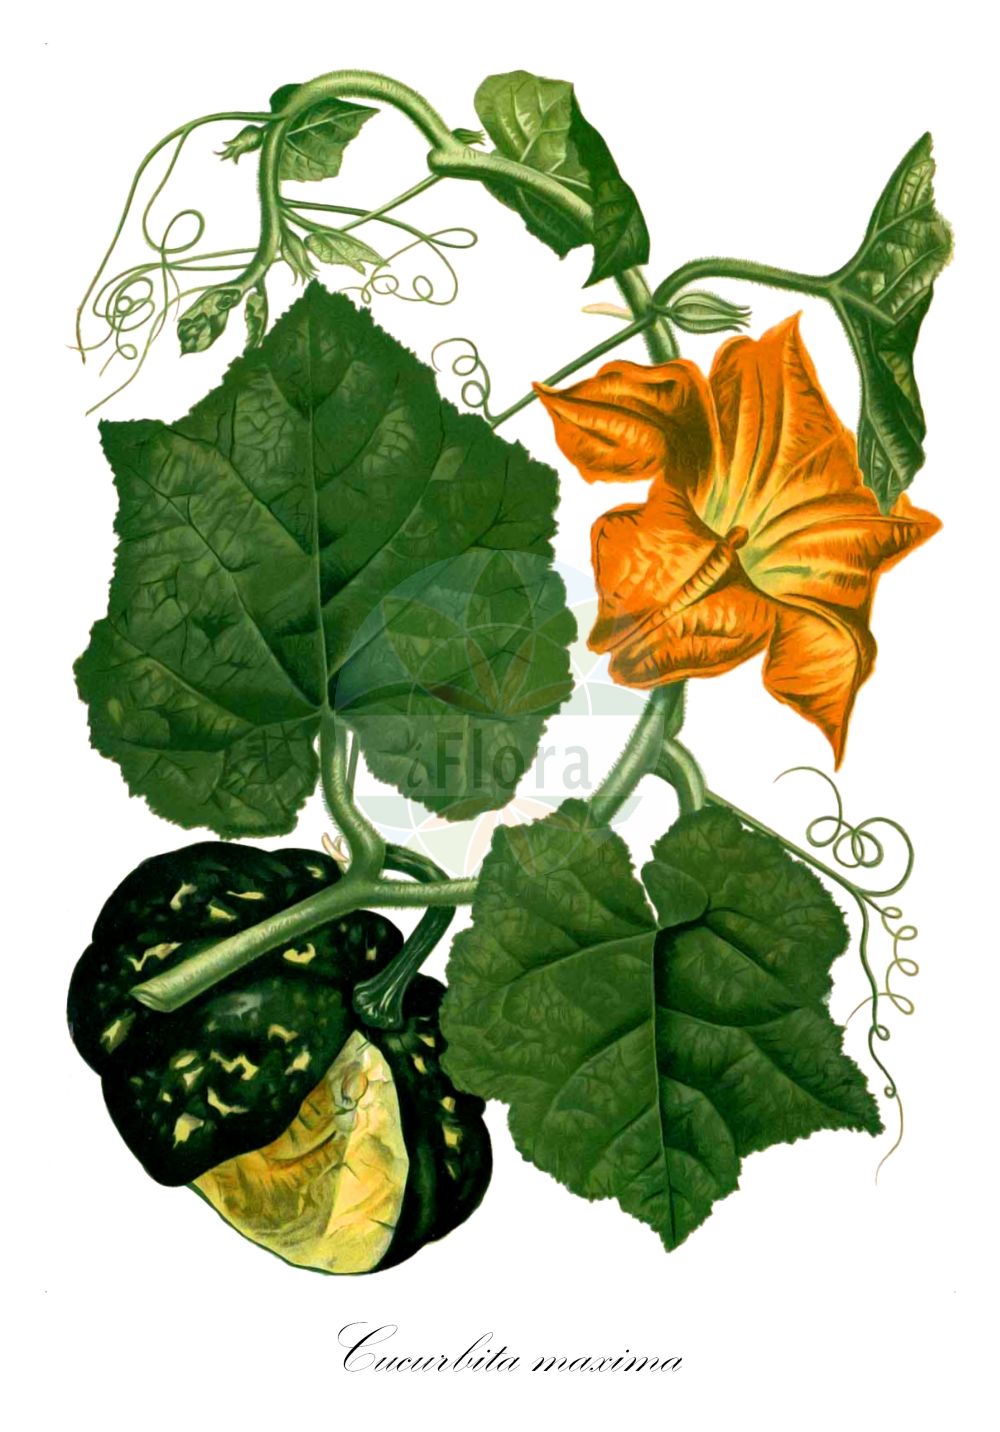 Historische Abbildung von Cucurbita maxima (Pumpkin). ---- Historical Drawing of Cucurbita maxima (Pumpkin).(Cucurbita maxima,Pumpkin,Cucurbita maxima,Cucurbita pileiformis,Cucurbita turbaniformis,Cucurbita,Cucurbitaceae,Kürbisgewächse,Cucurbit family,Blanco (1875))